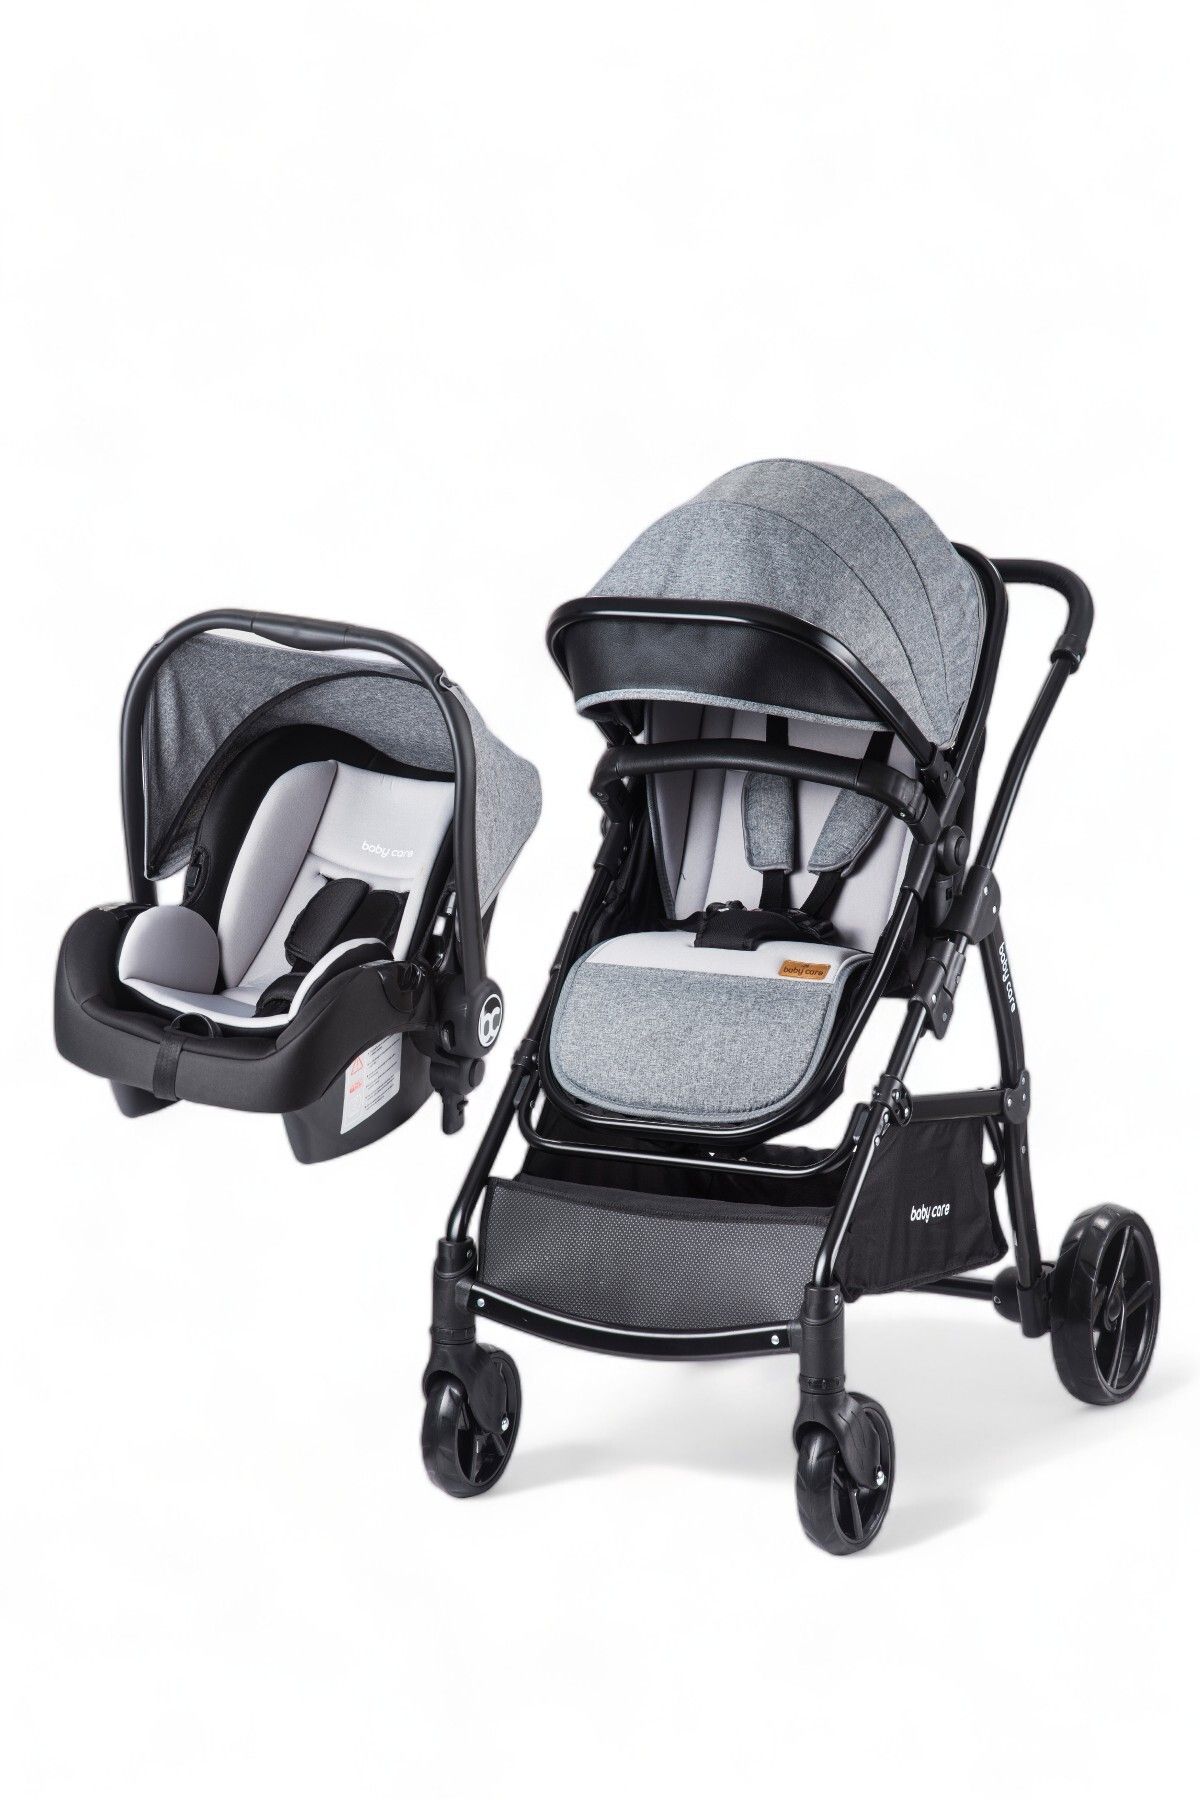 Baby Care Bc 315 - Safari Pro Travel Sistem Bebek Arabası (VİZON)